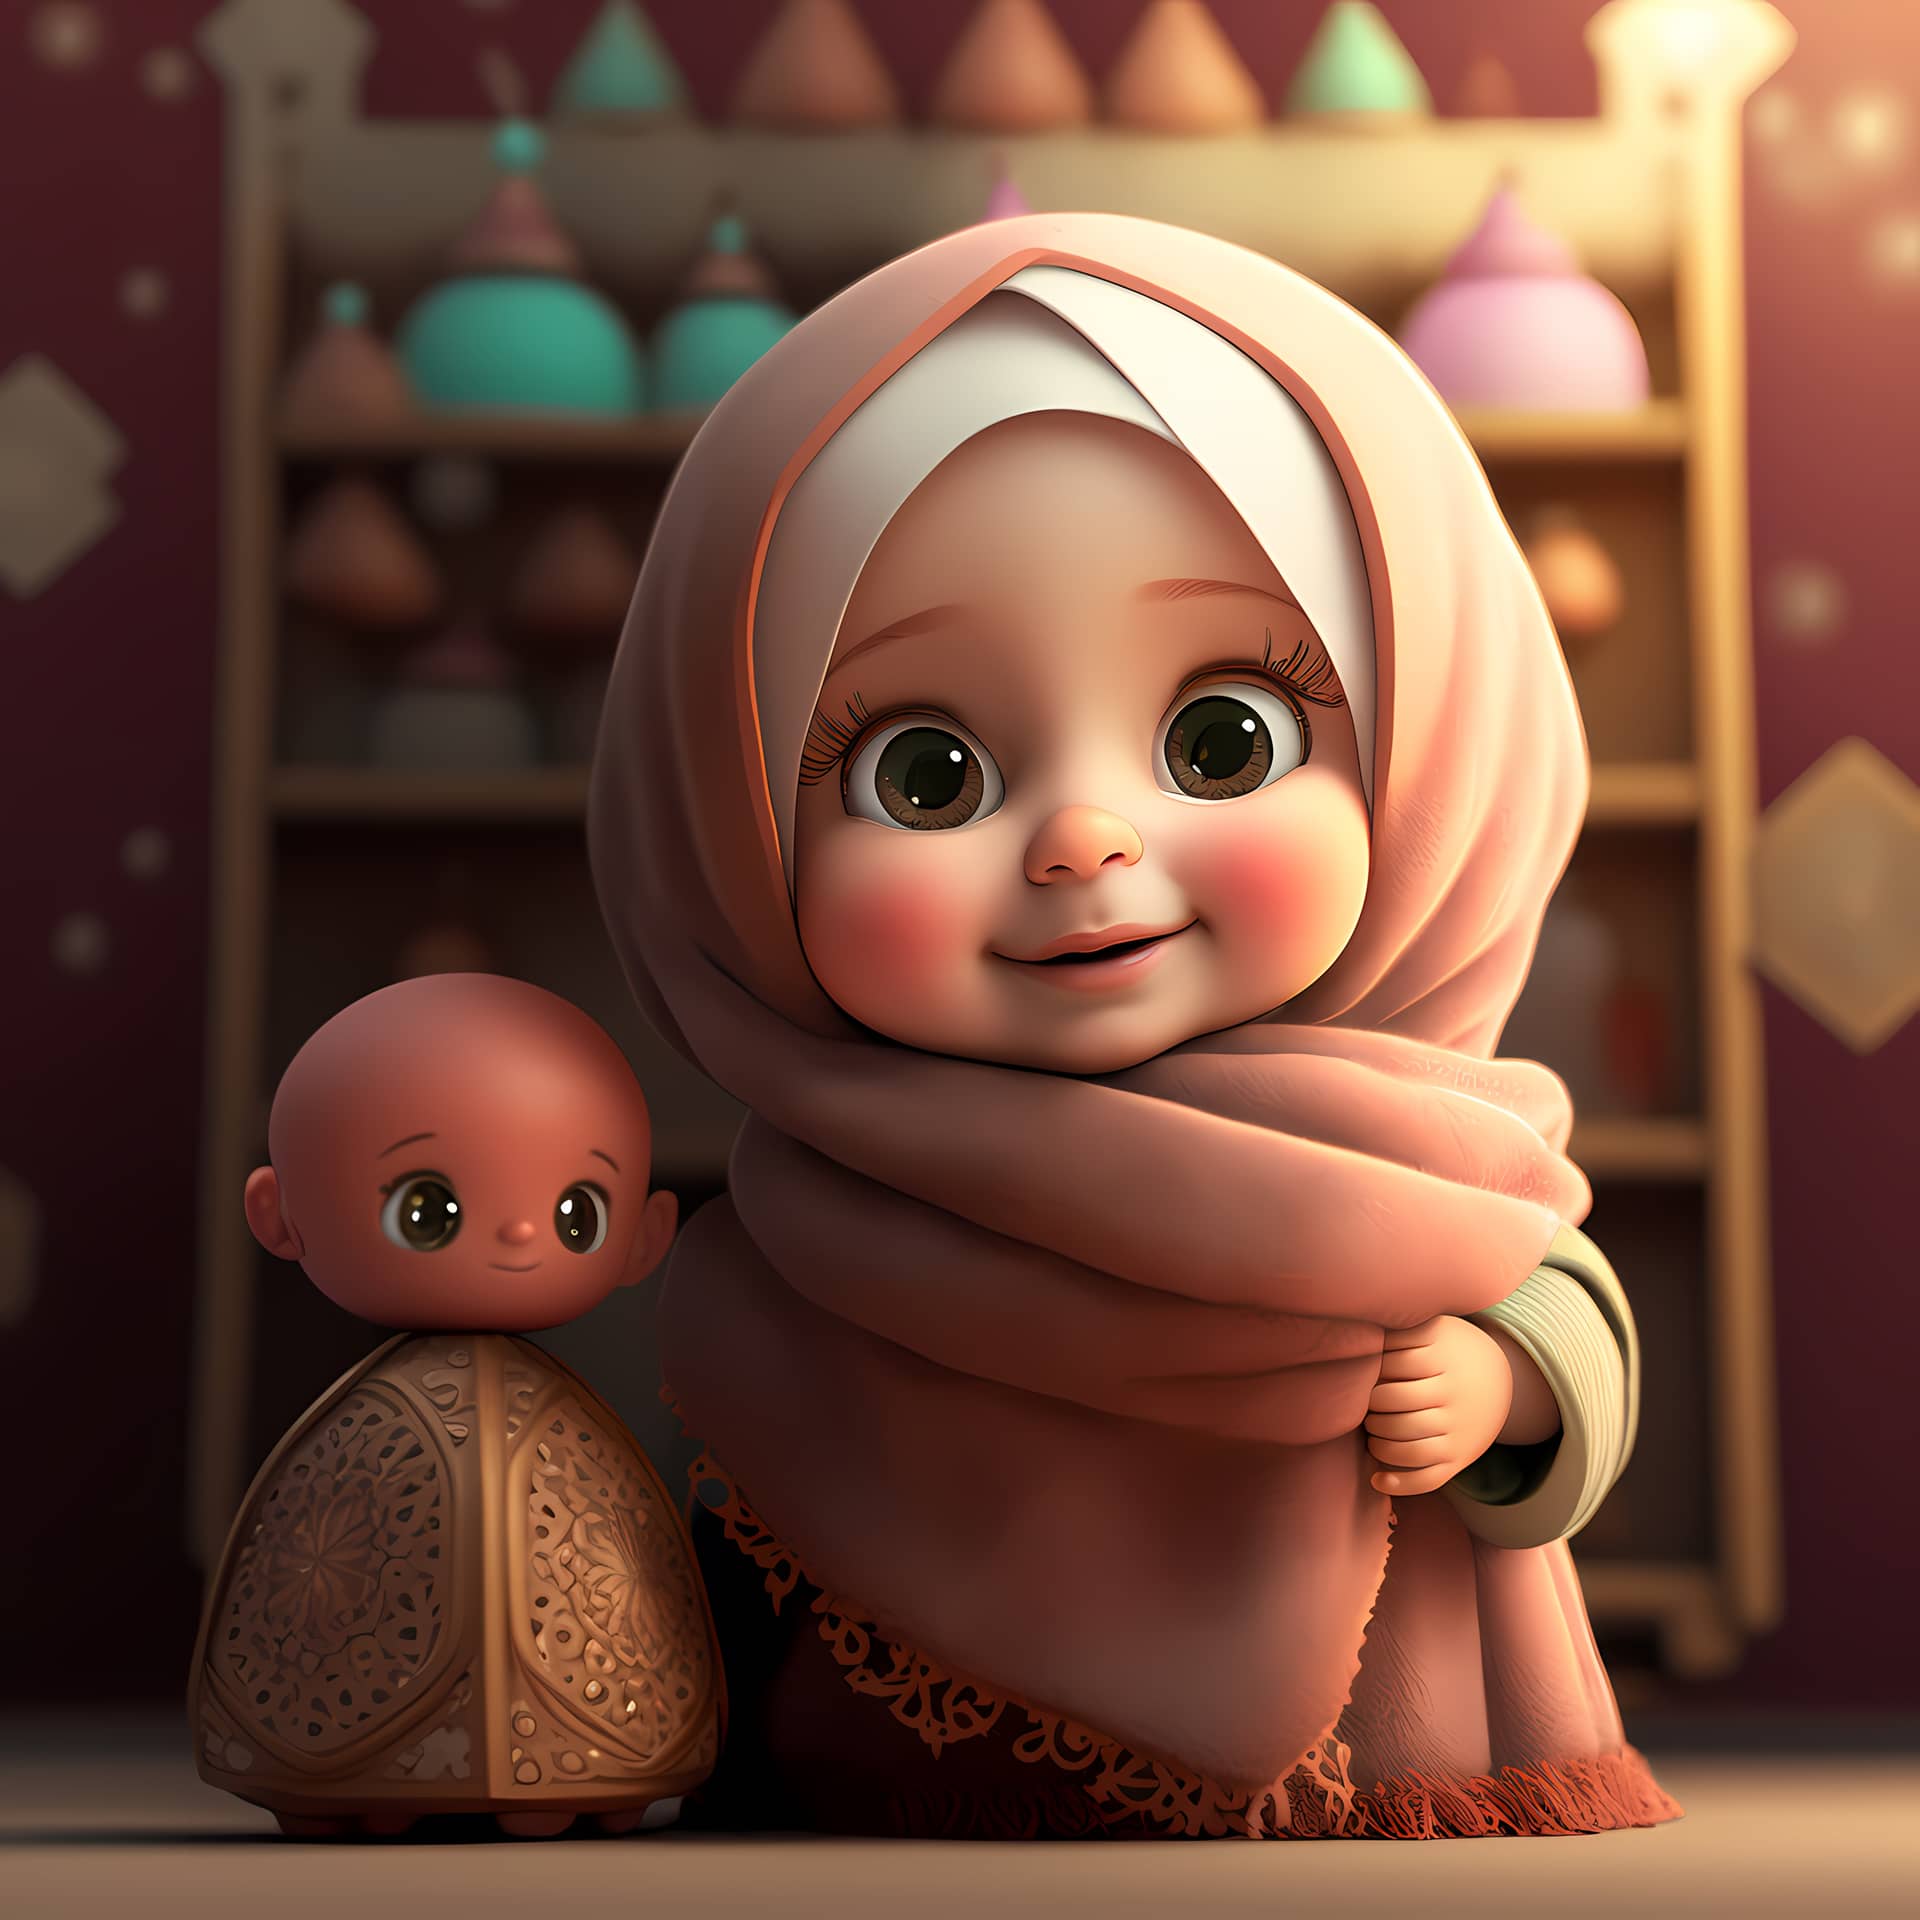 Adorable cute muslim children cartoon profile pictures